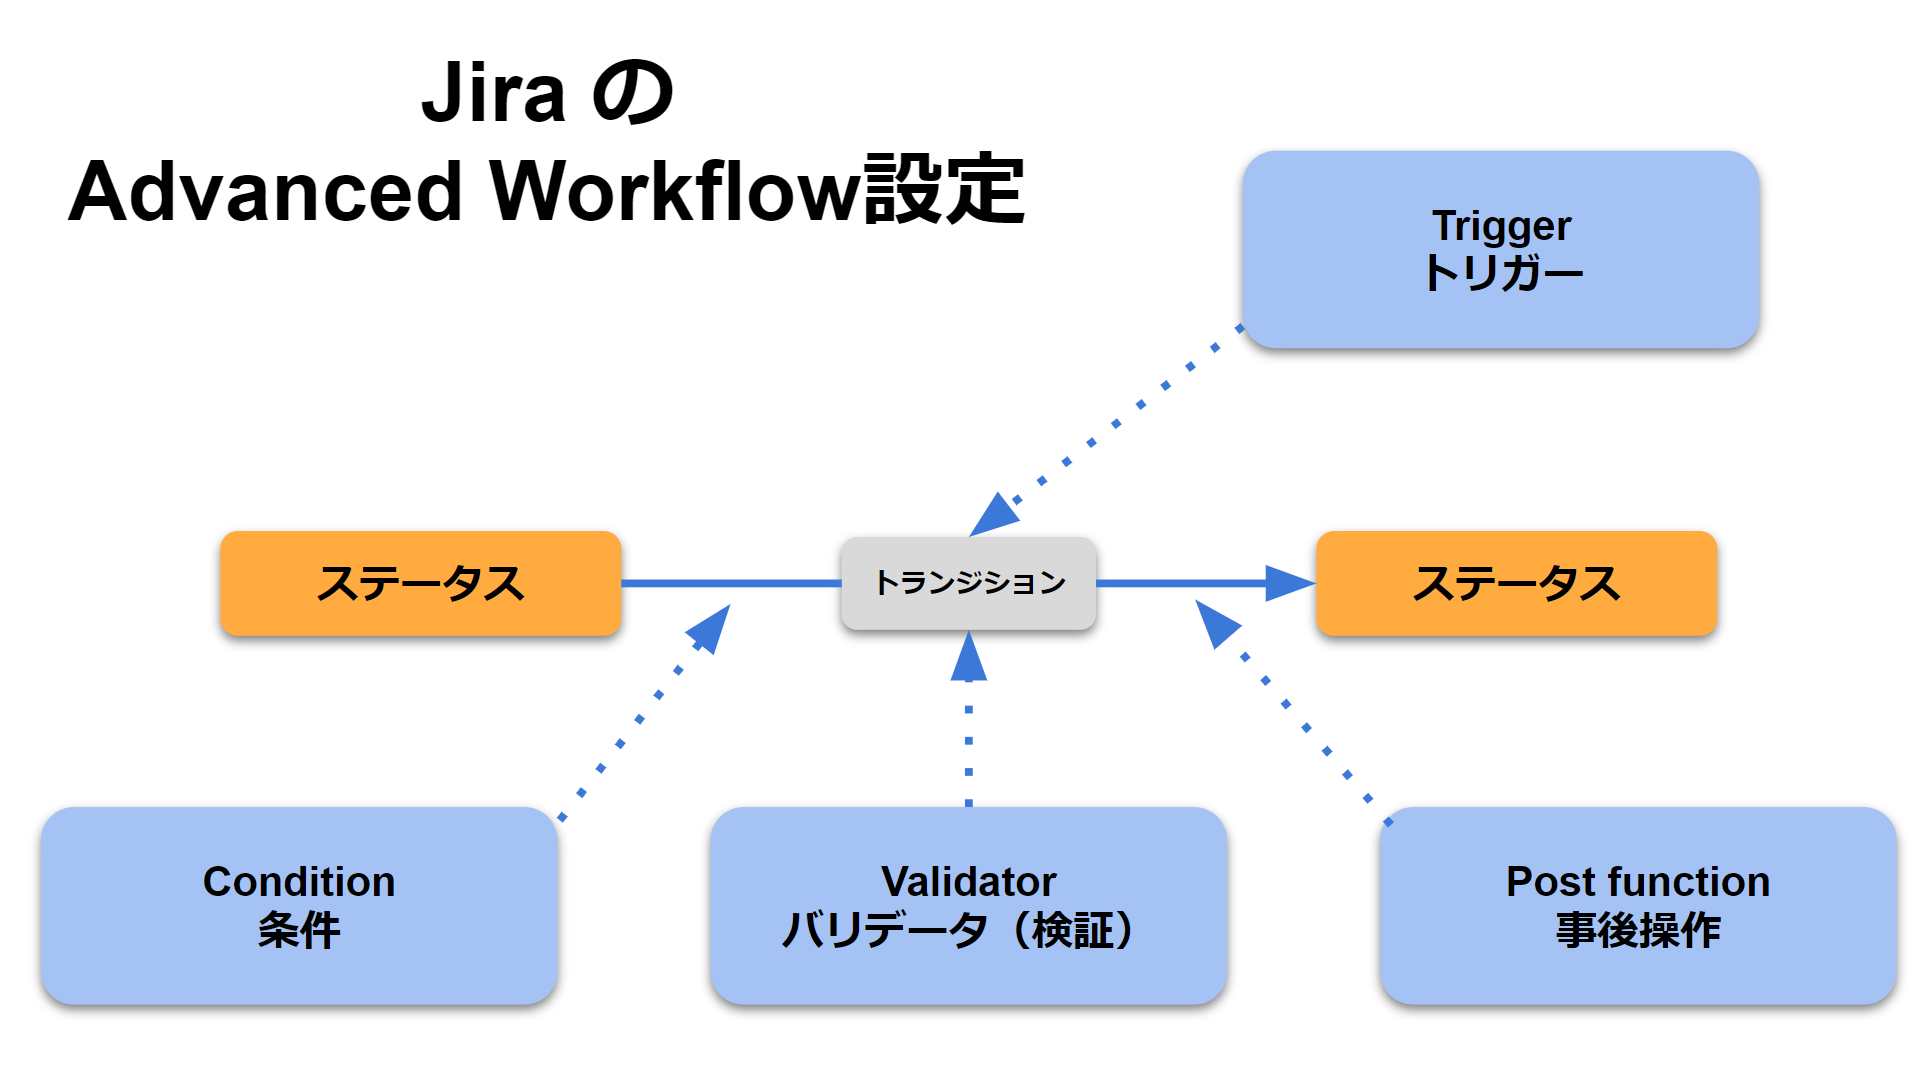 Advanced Workflow